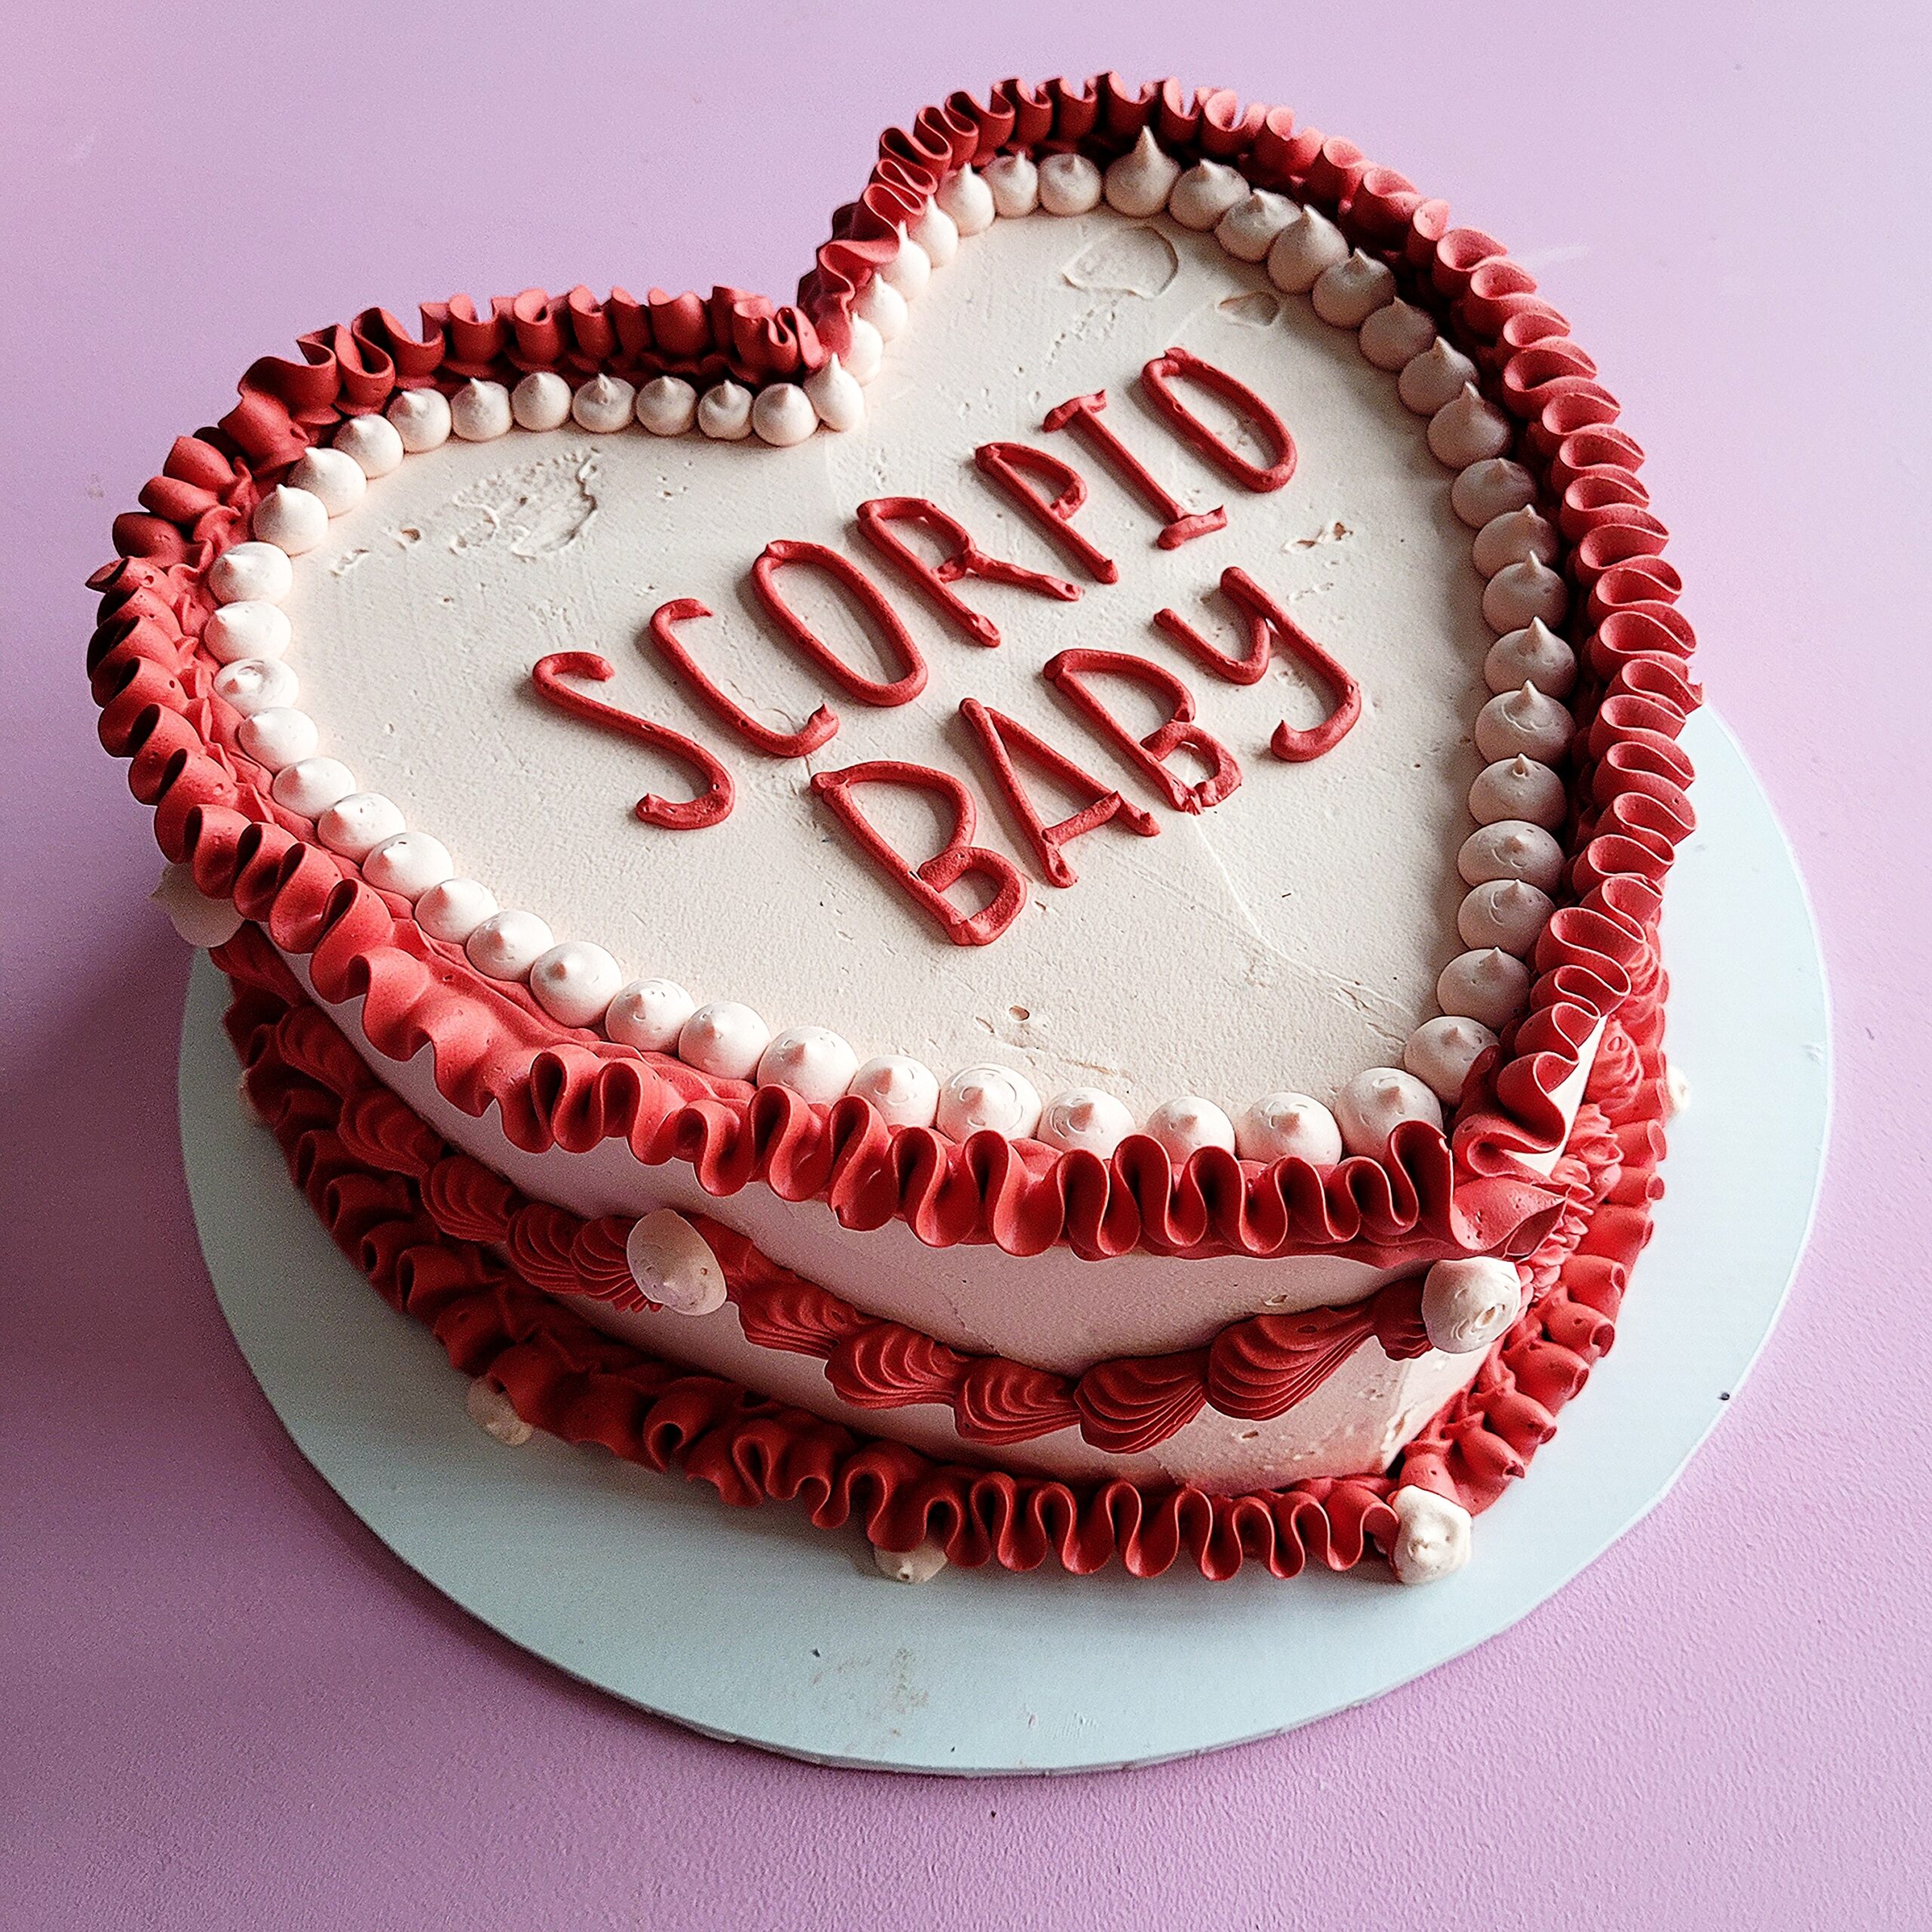 We LOVE Heart Cakes!